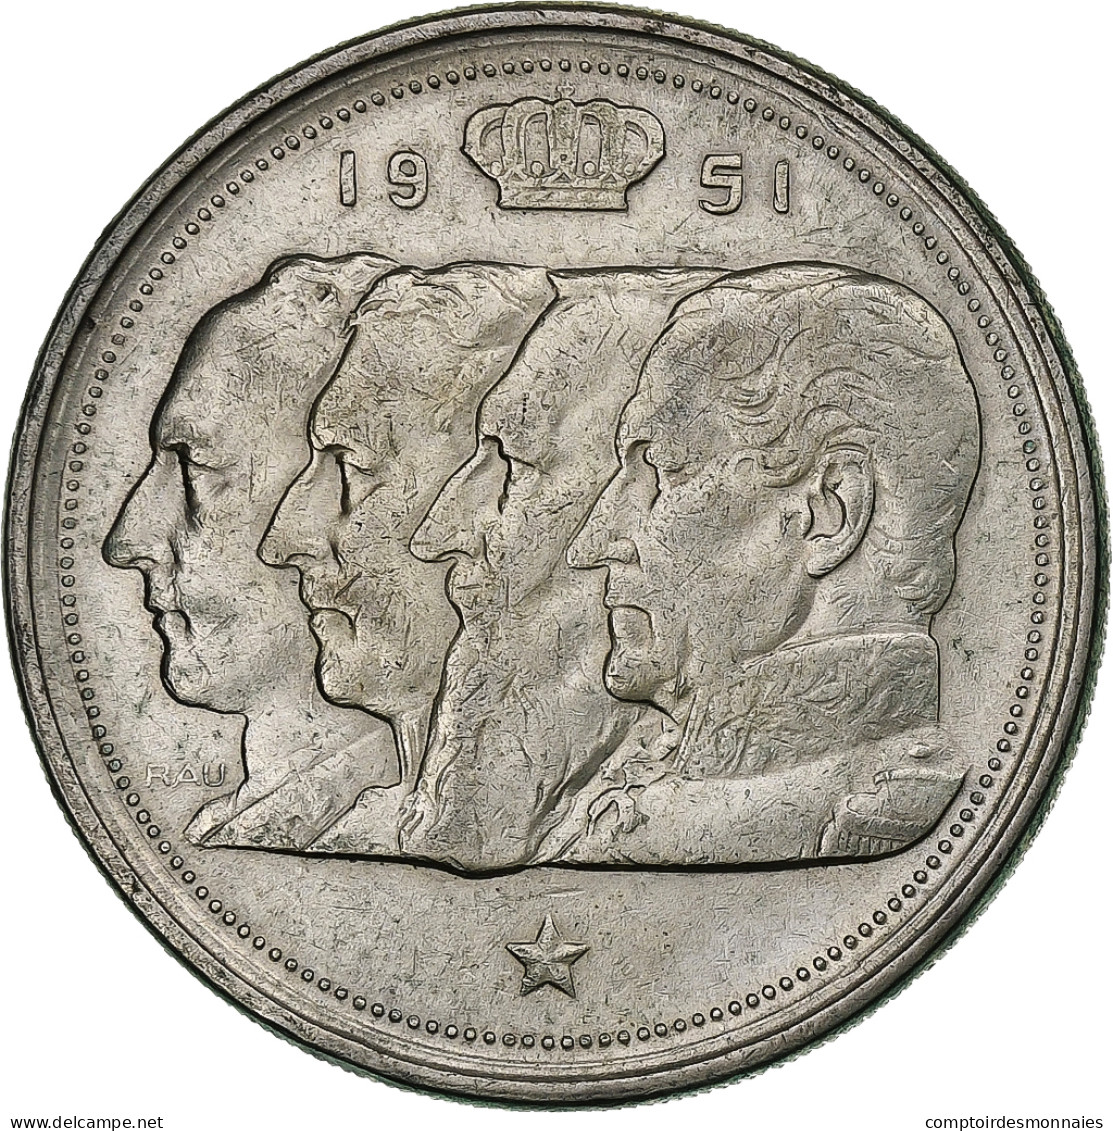 Belgique, 100 Francs, 100 Frank, 1951, Argent, TTB, KM:139.1 - 100 Francs